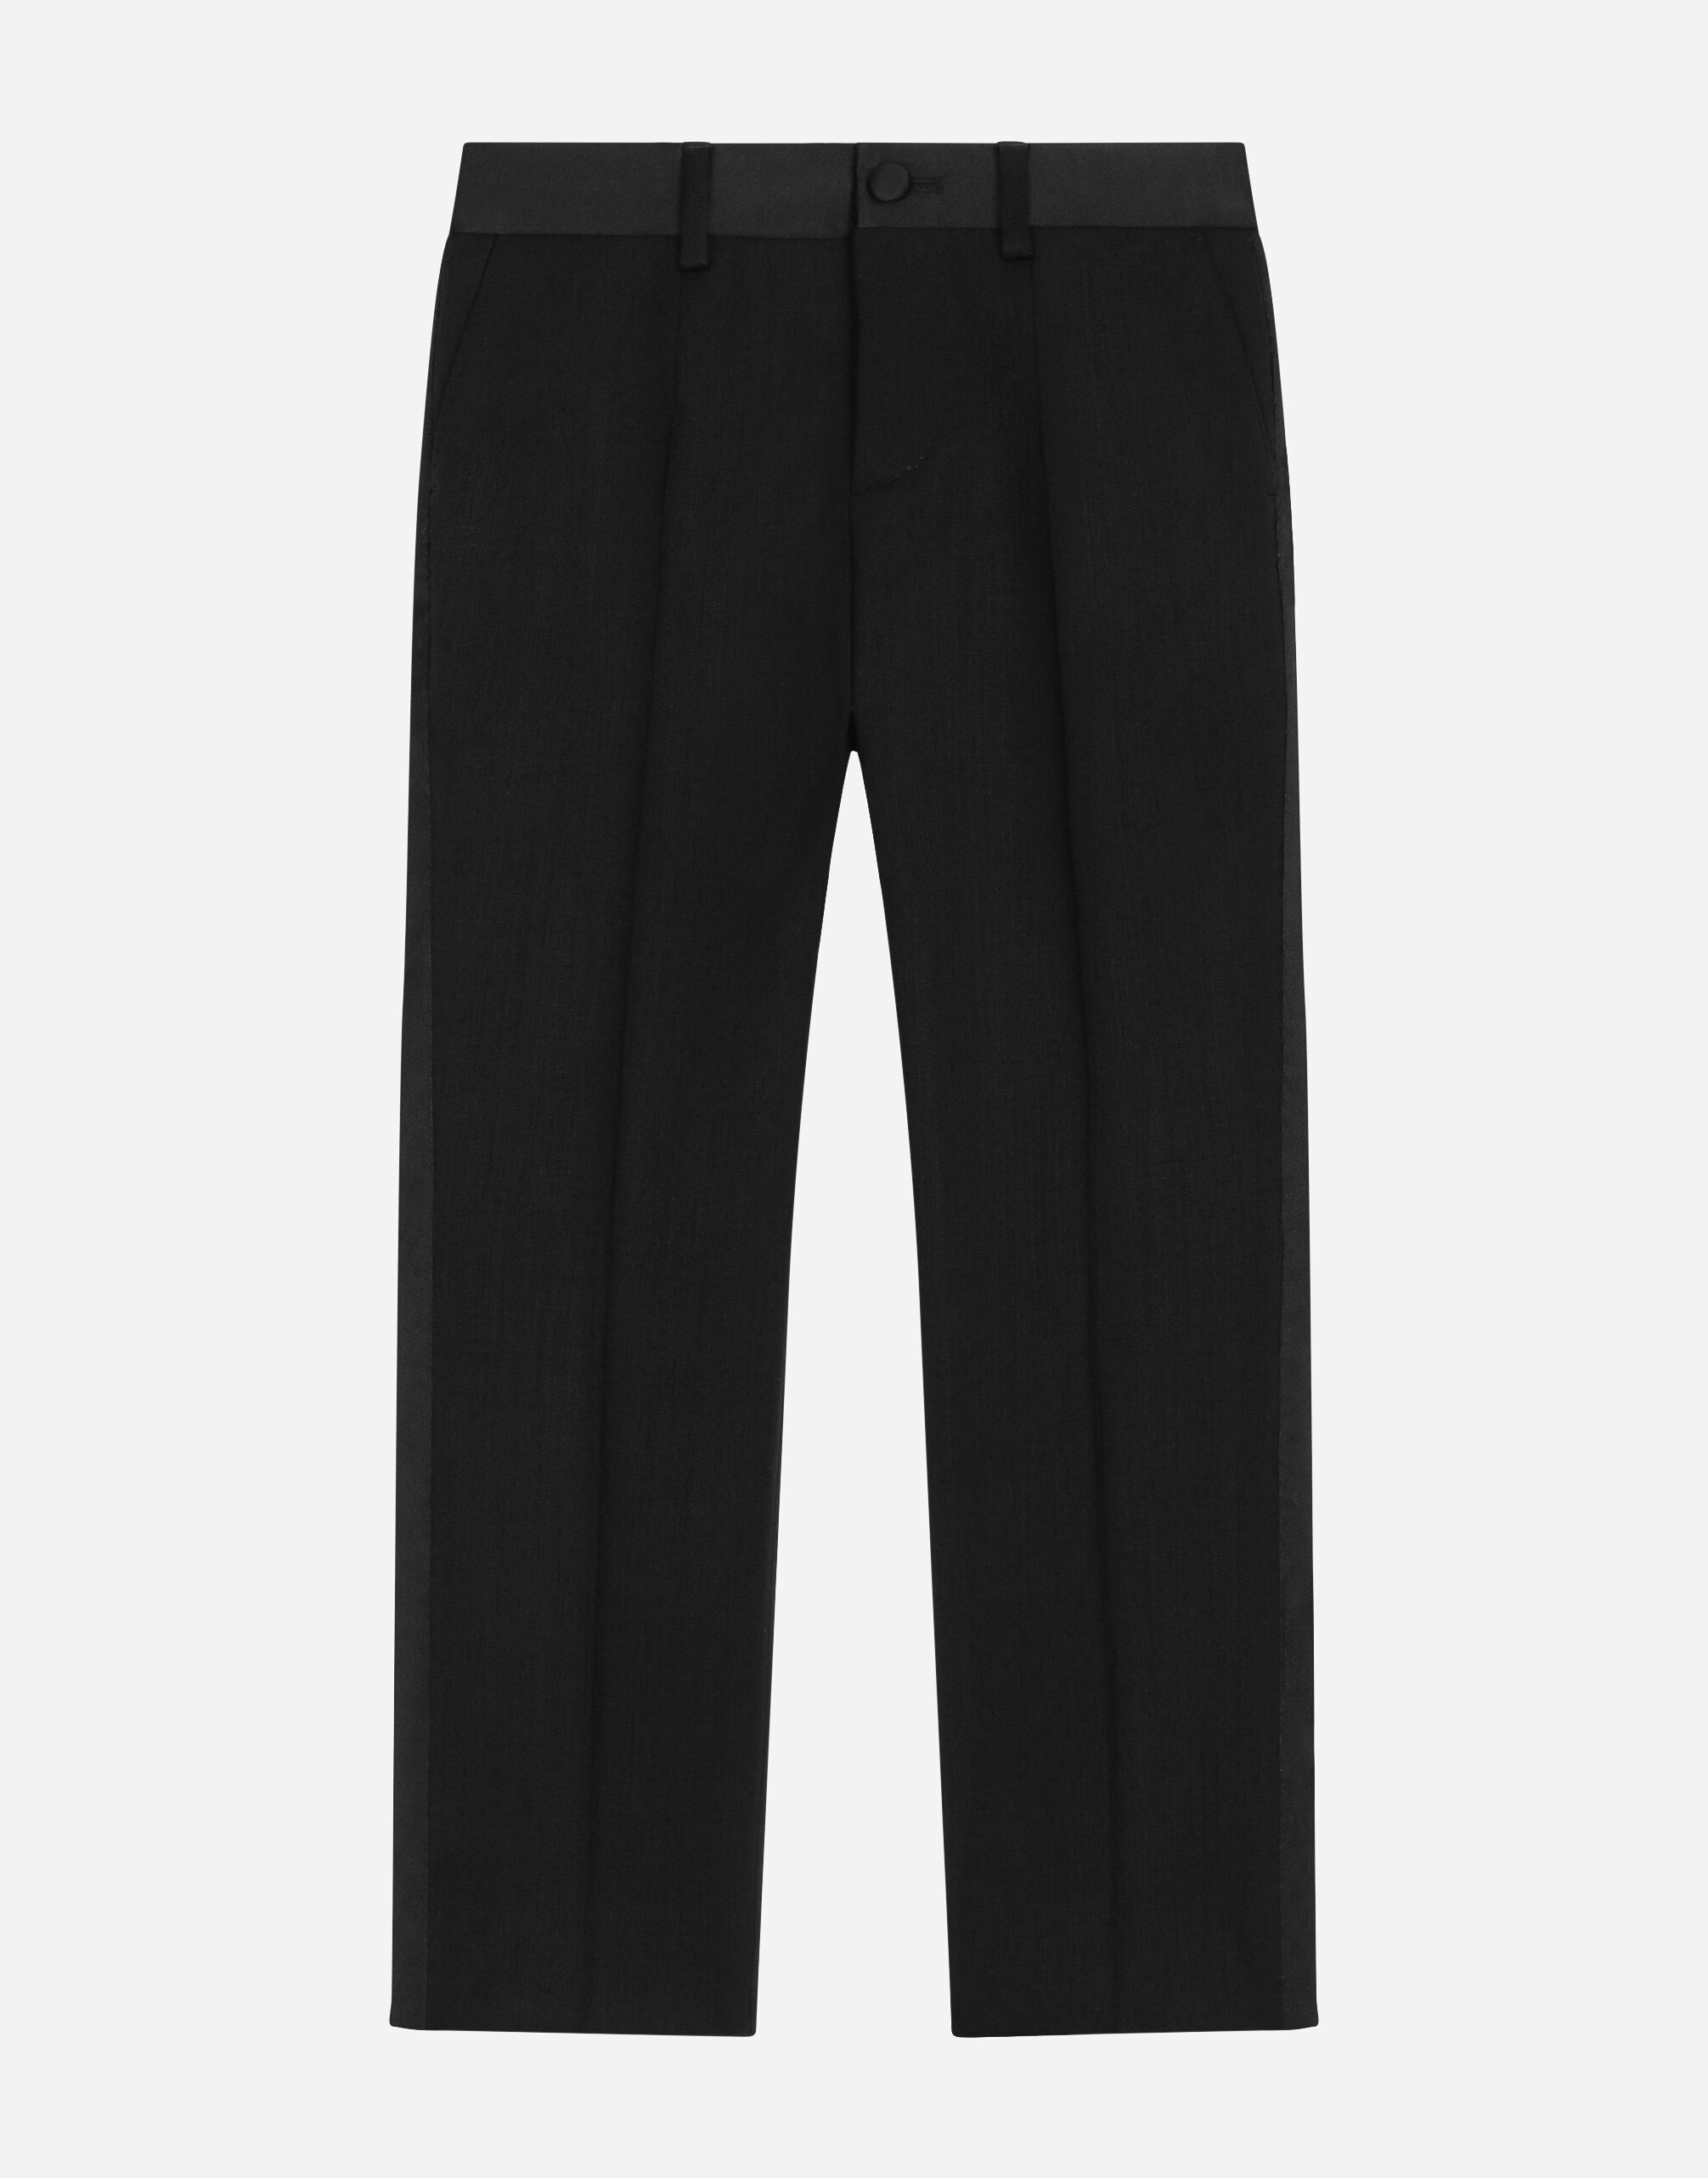 Dolce & Gabbana Classic two-way stretch twill pants Black EB0003AB000